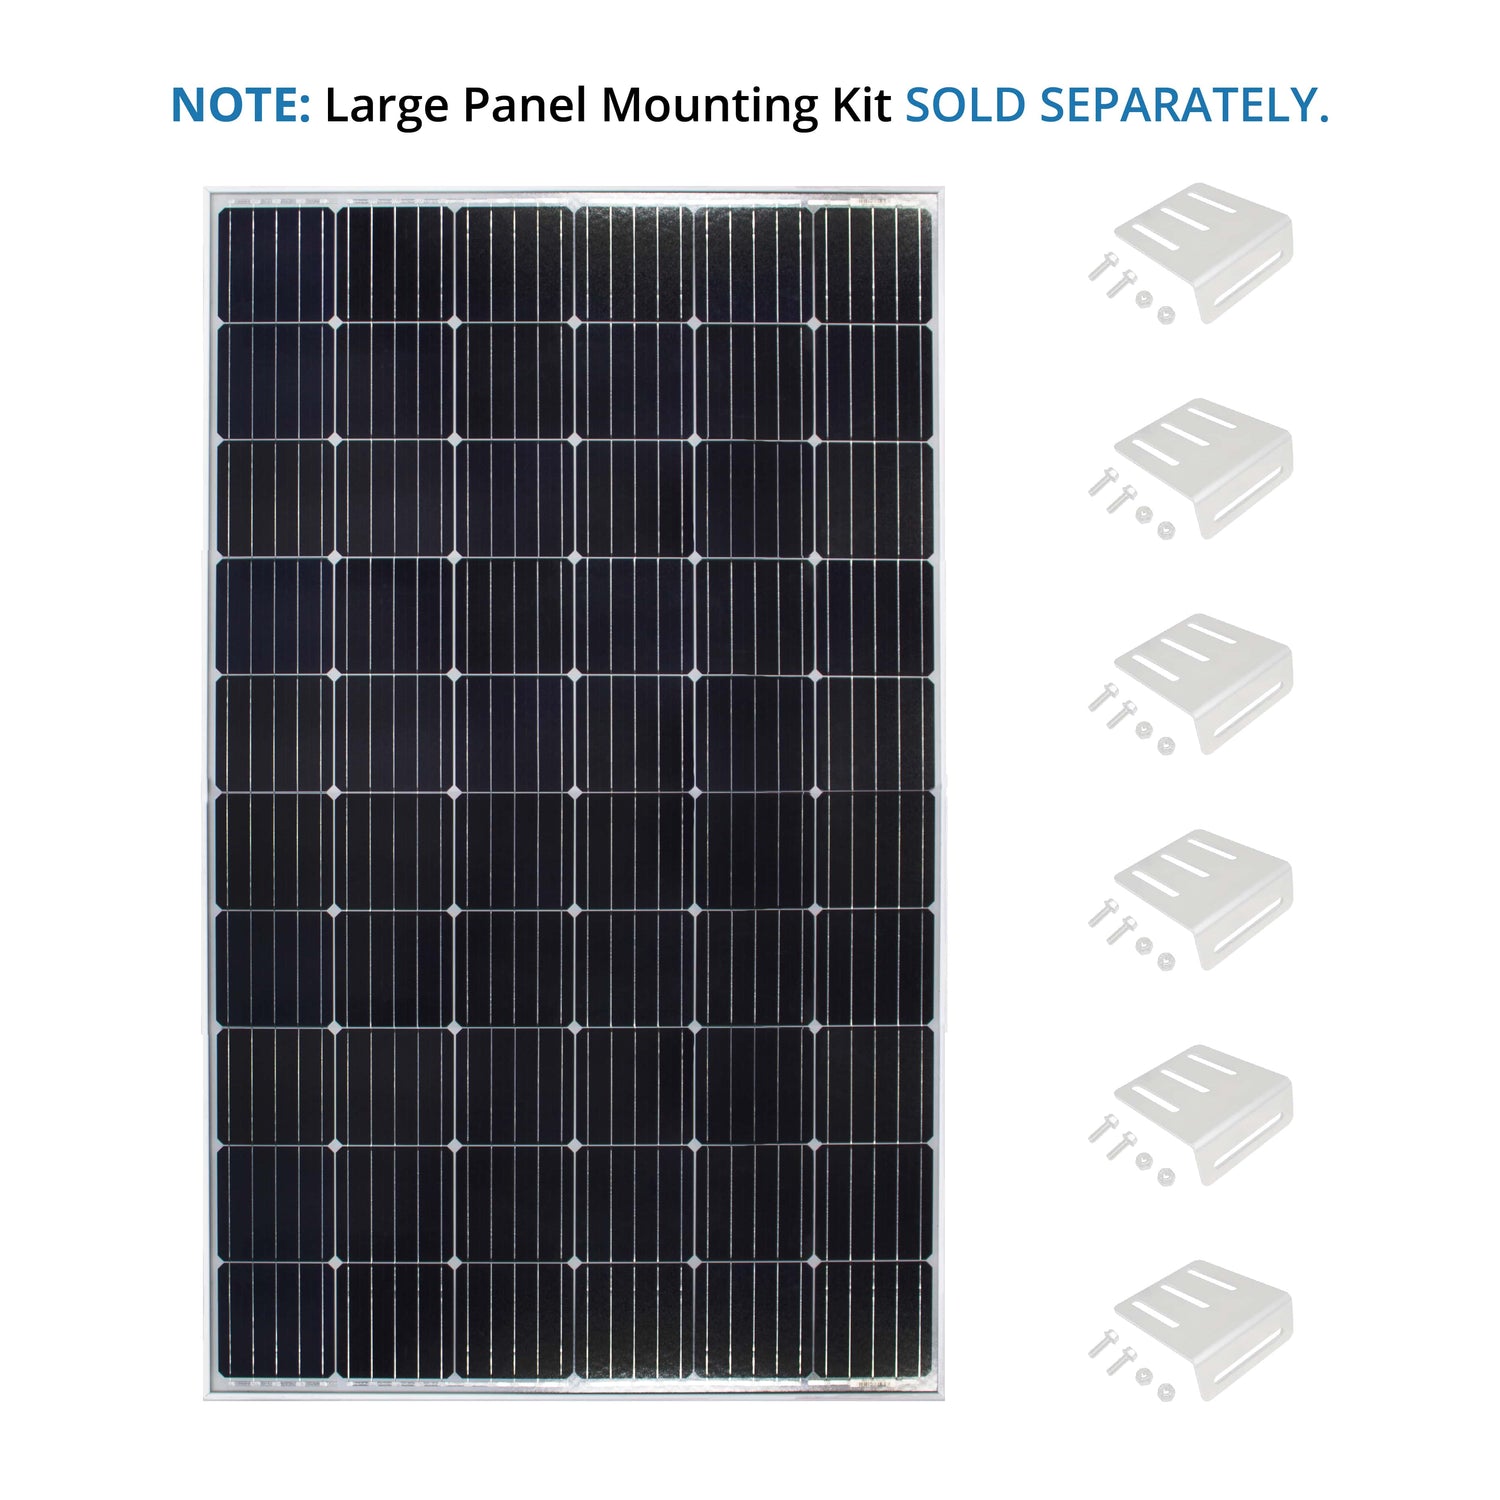 Future-Solutions-300-Watt-Monocrystalline-Solar-Panel-with-pigtail-MC4-connectors-high-efficiency